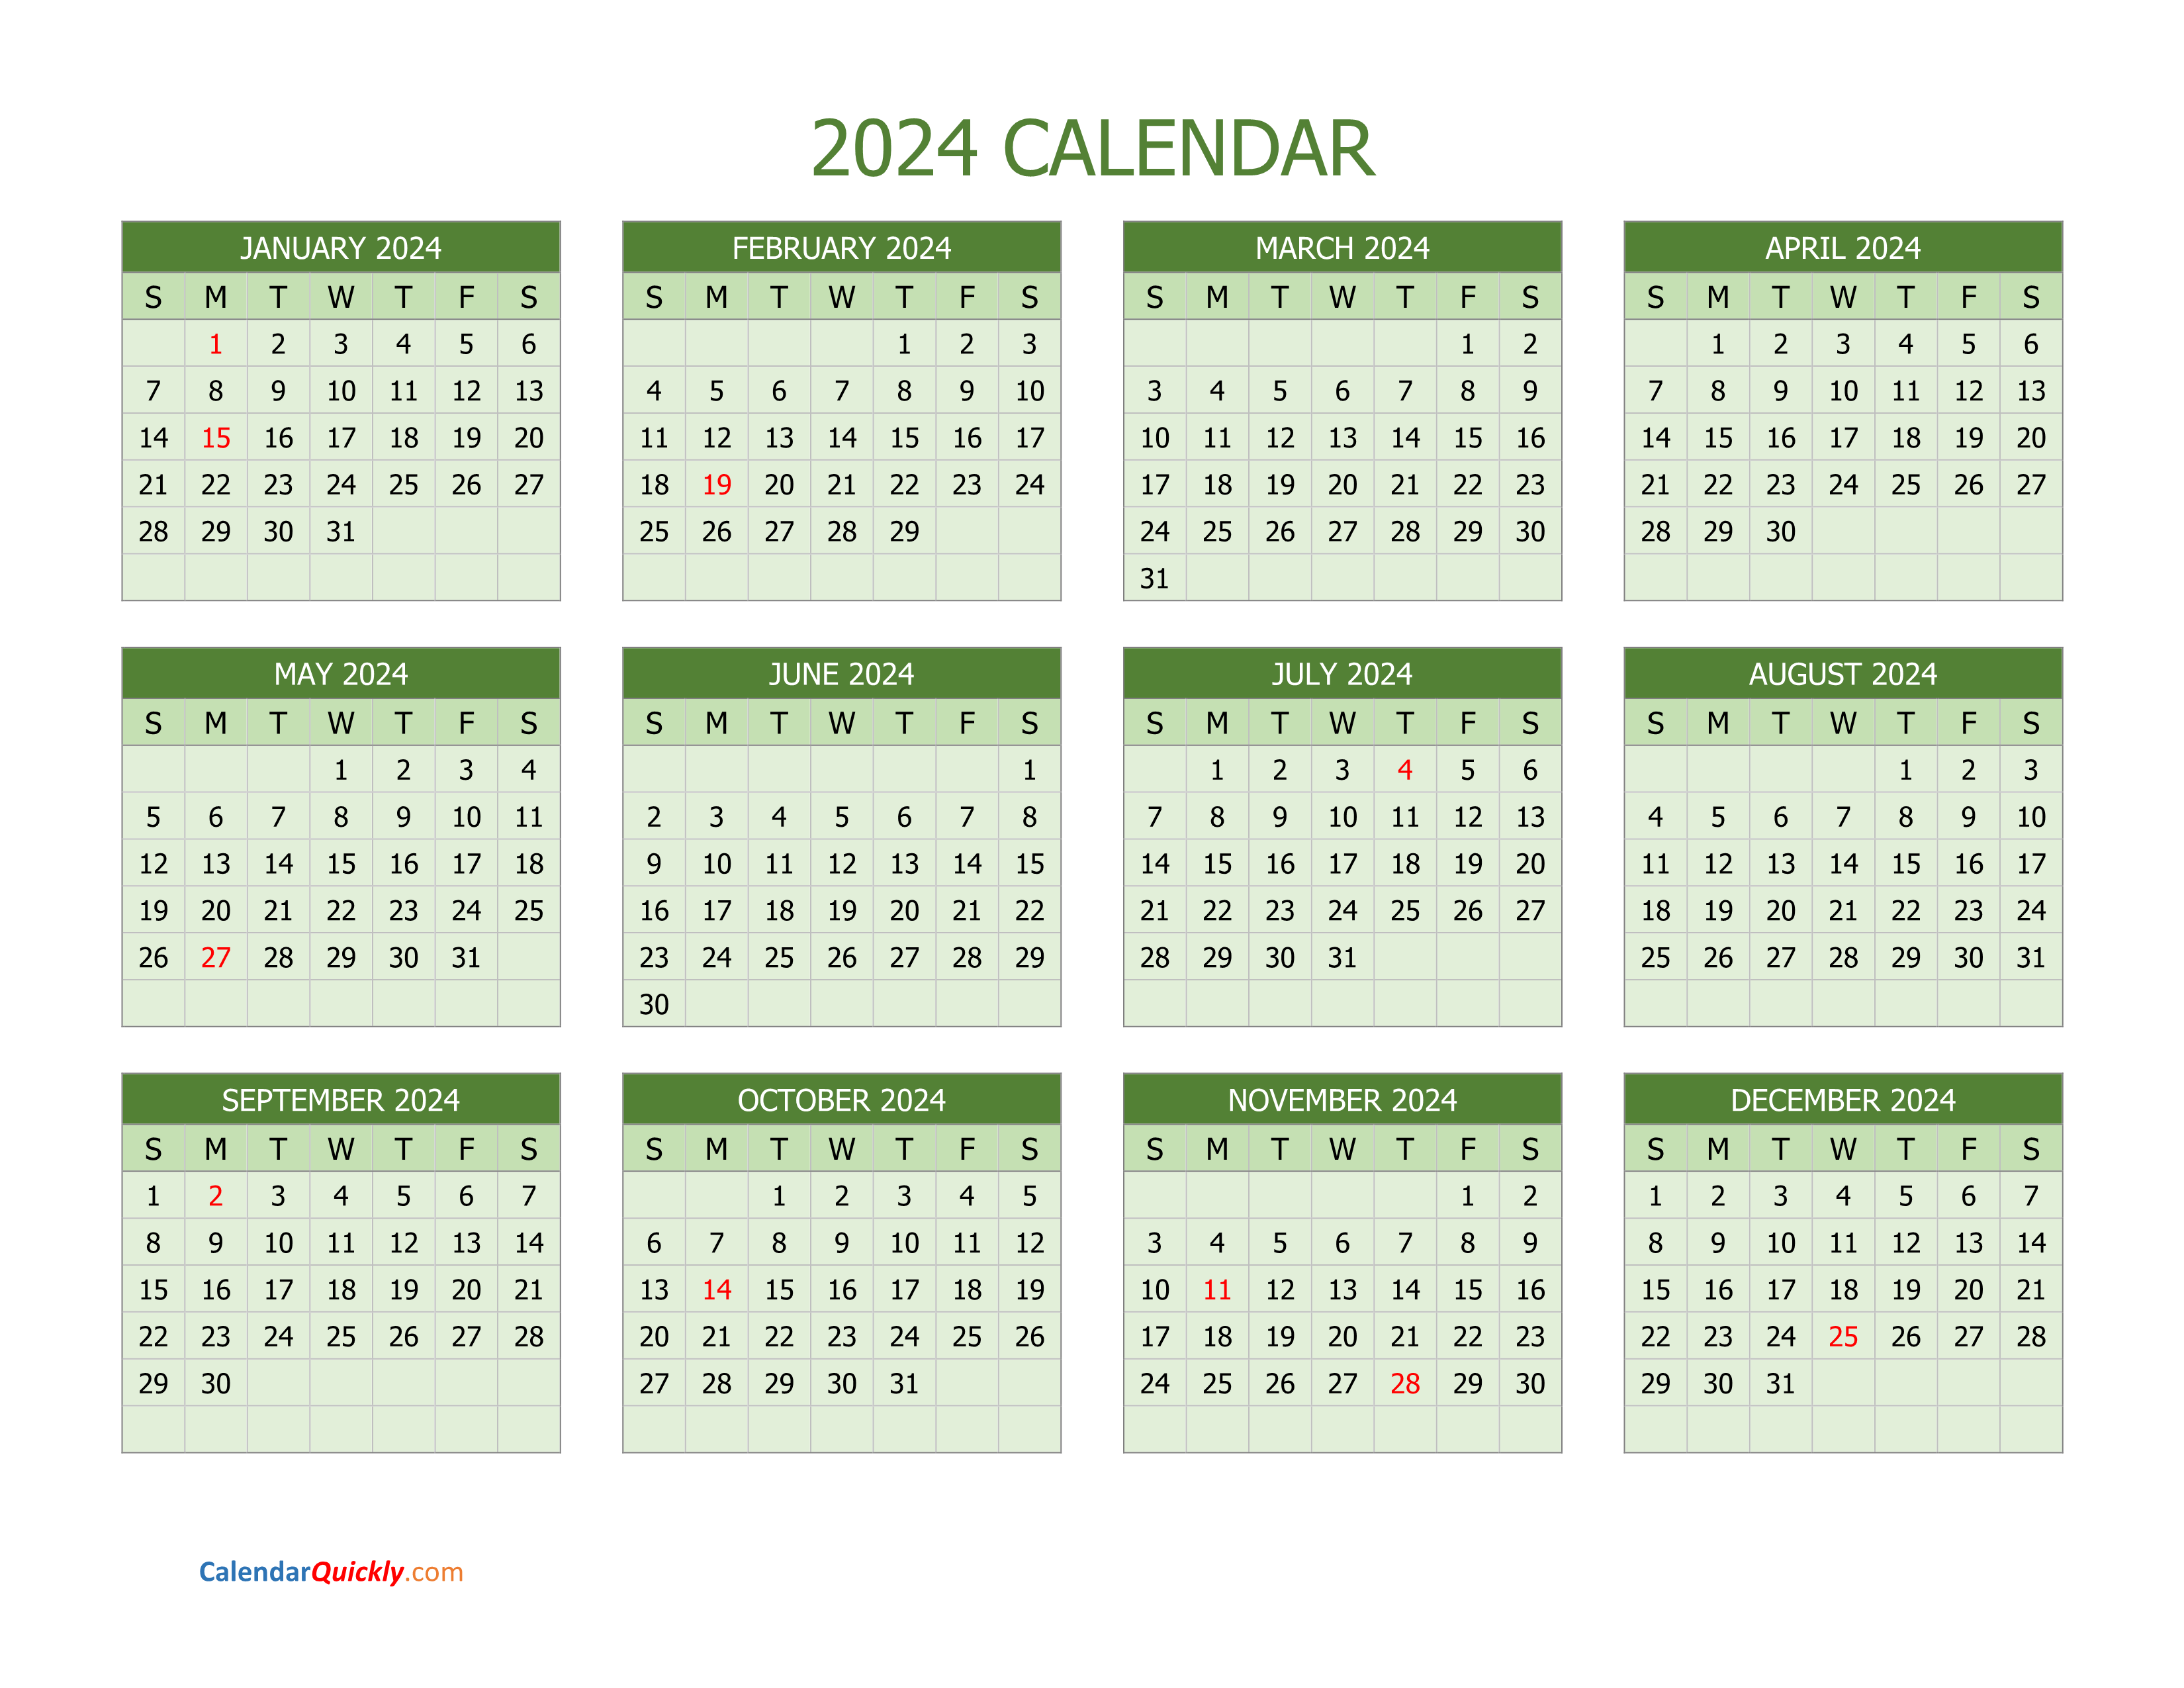 yearly-calendar-2024-calendar-quickly